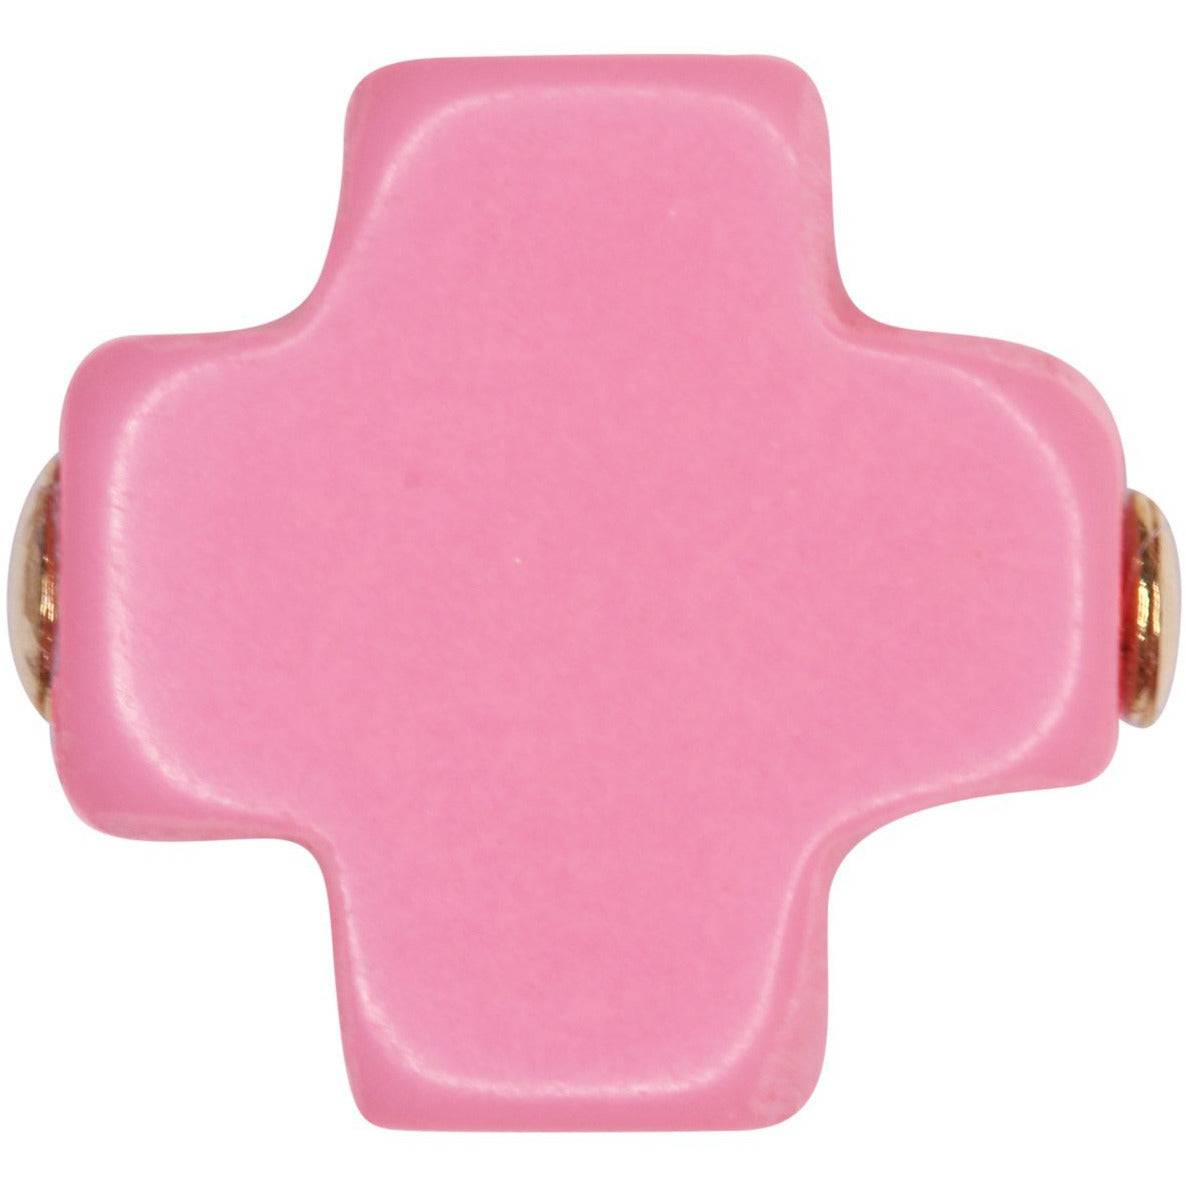 Enewton - earring - Signature Cross Studs - Bright Pink - Findlay Rowe Designs